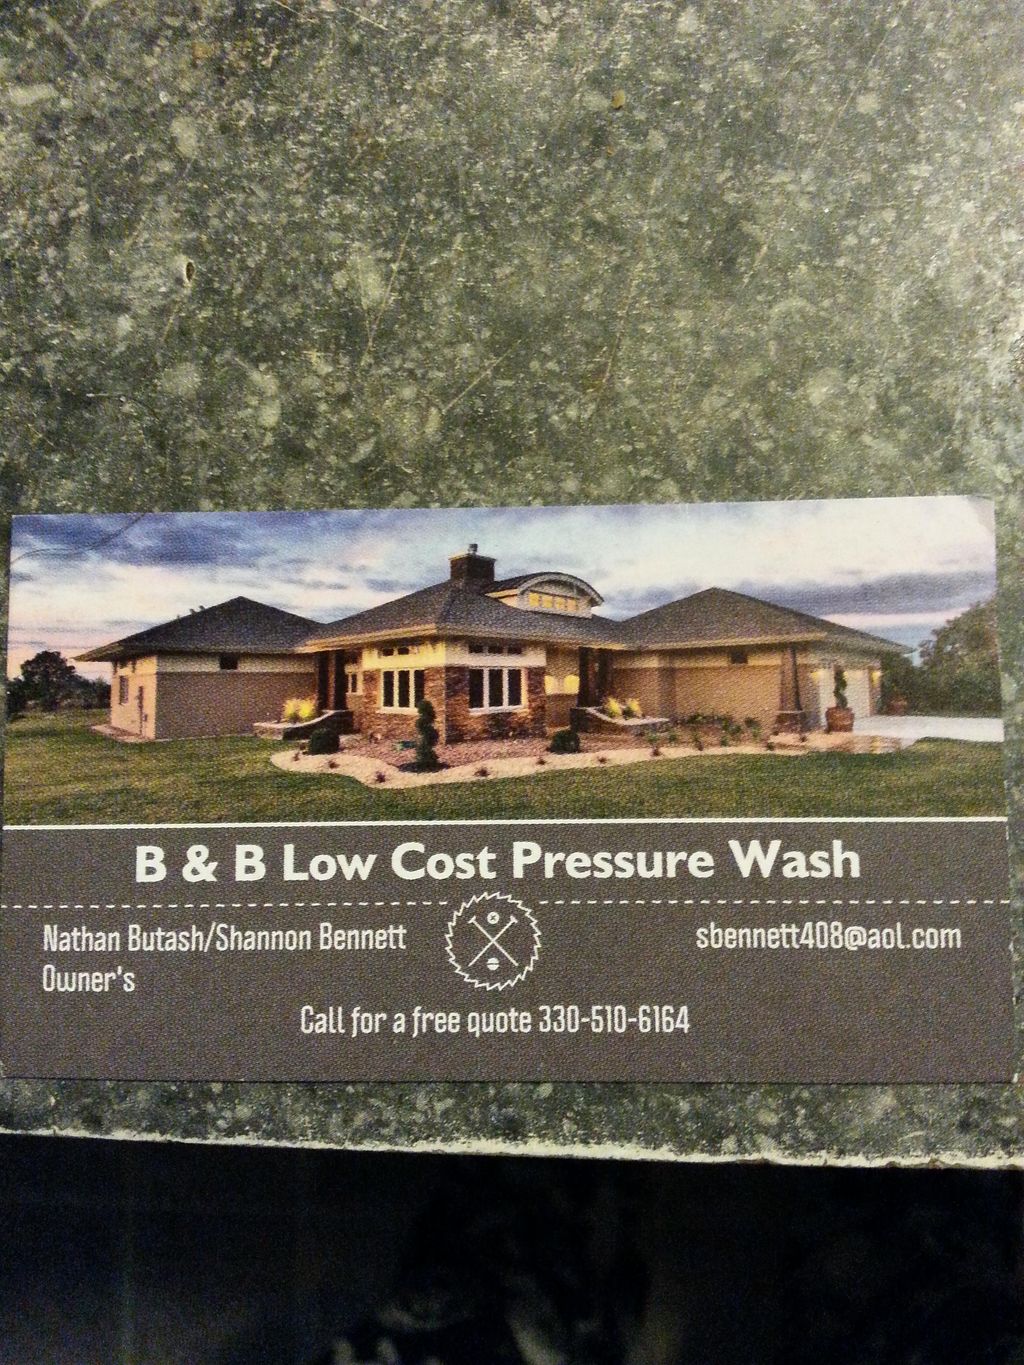 Bennett's Low Cost Pressure Wash